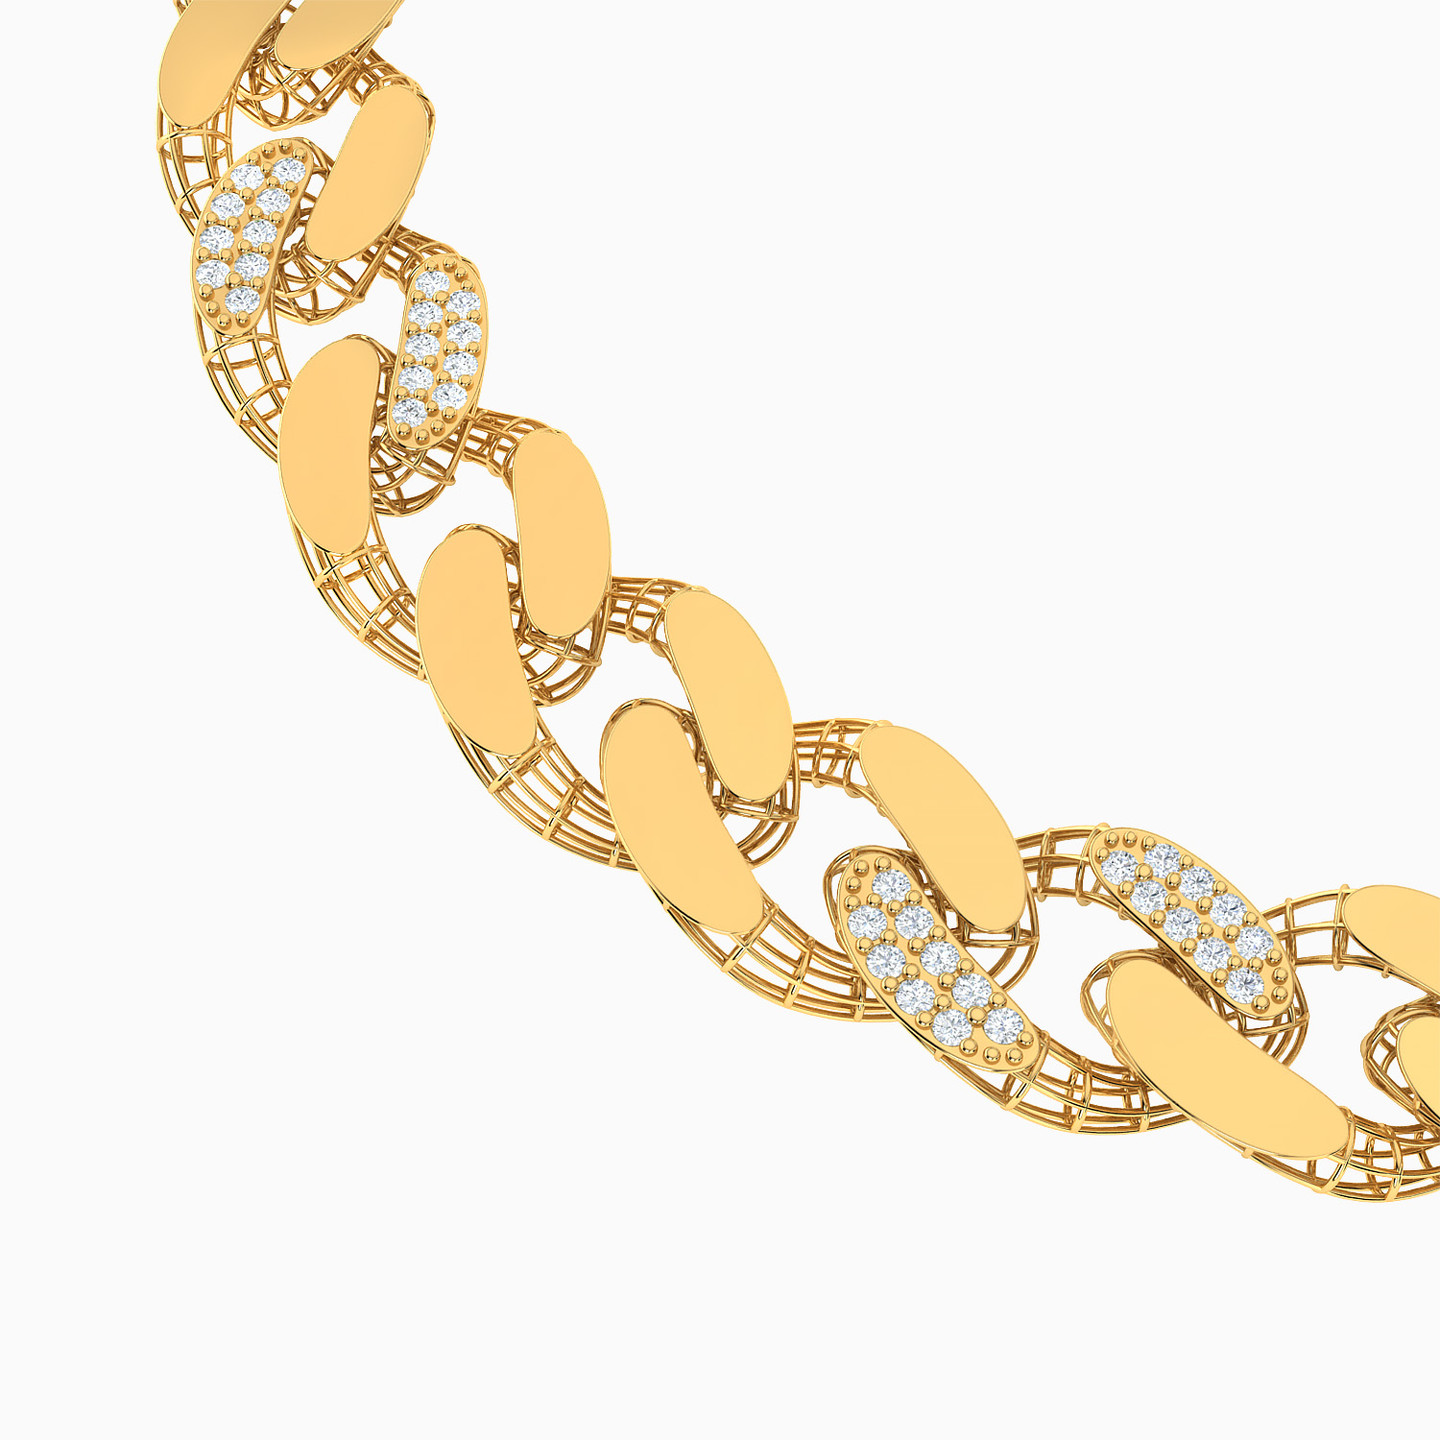 21K Gold Cubic Zirconia Chain Bracelet - 3